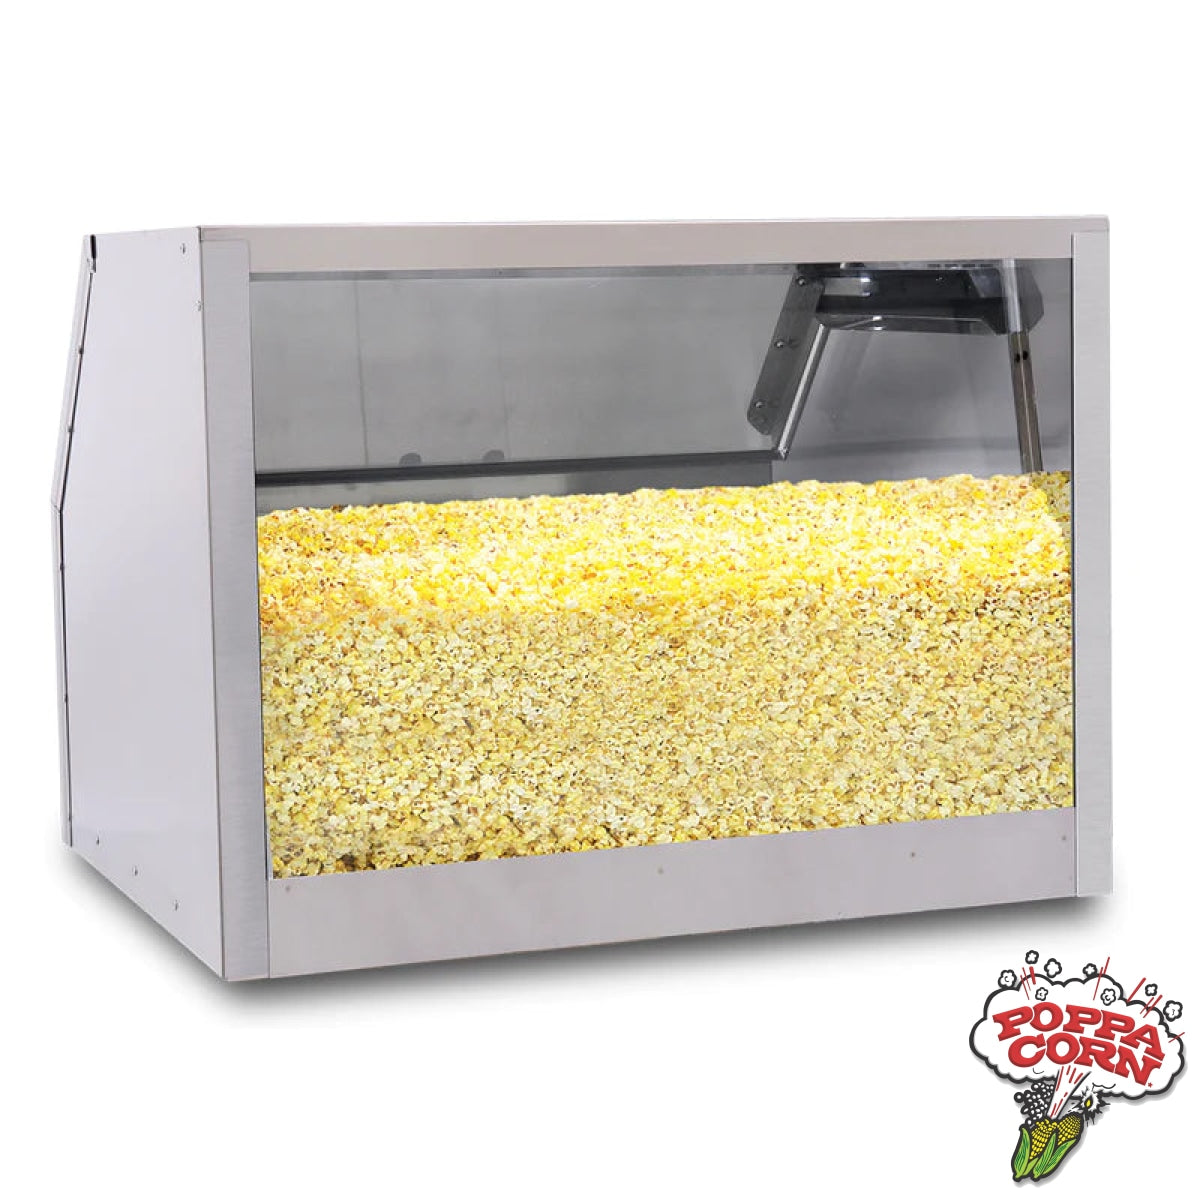 36" Main Street Elite Counter Popcorn Staging Cabinet - GM2686-00-010 - Poppa Corn Corp